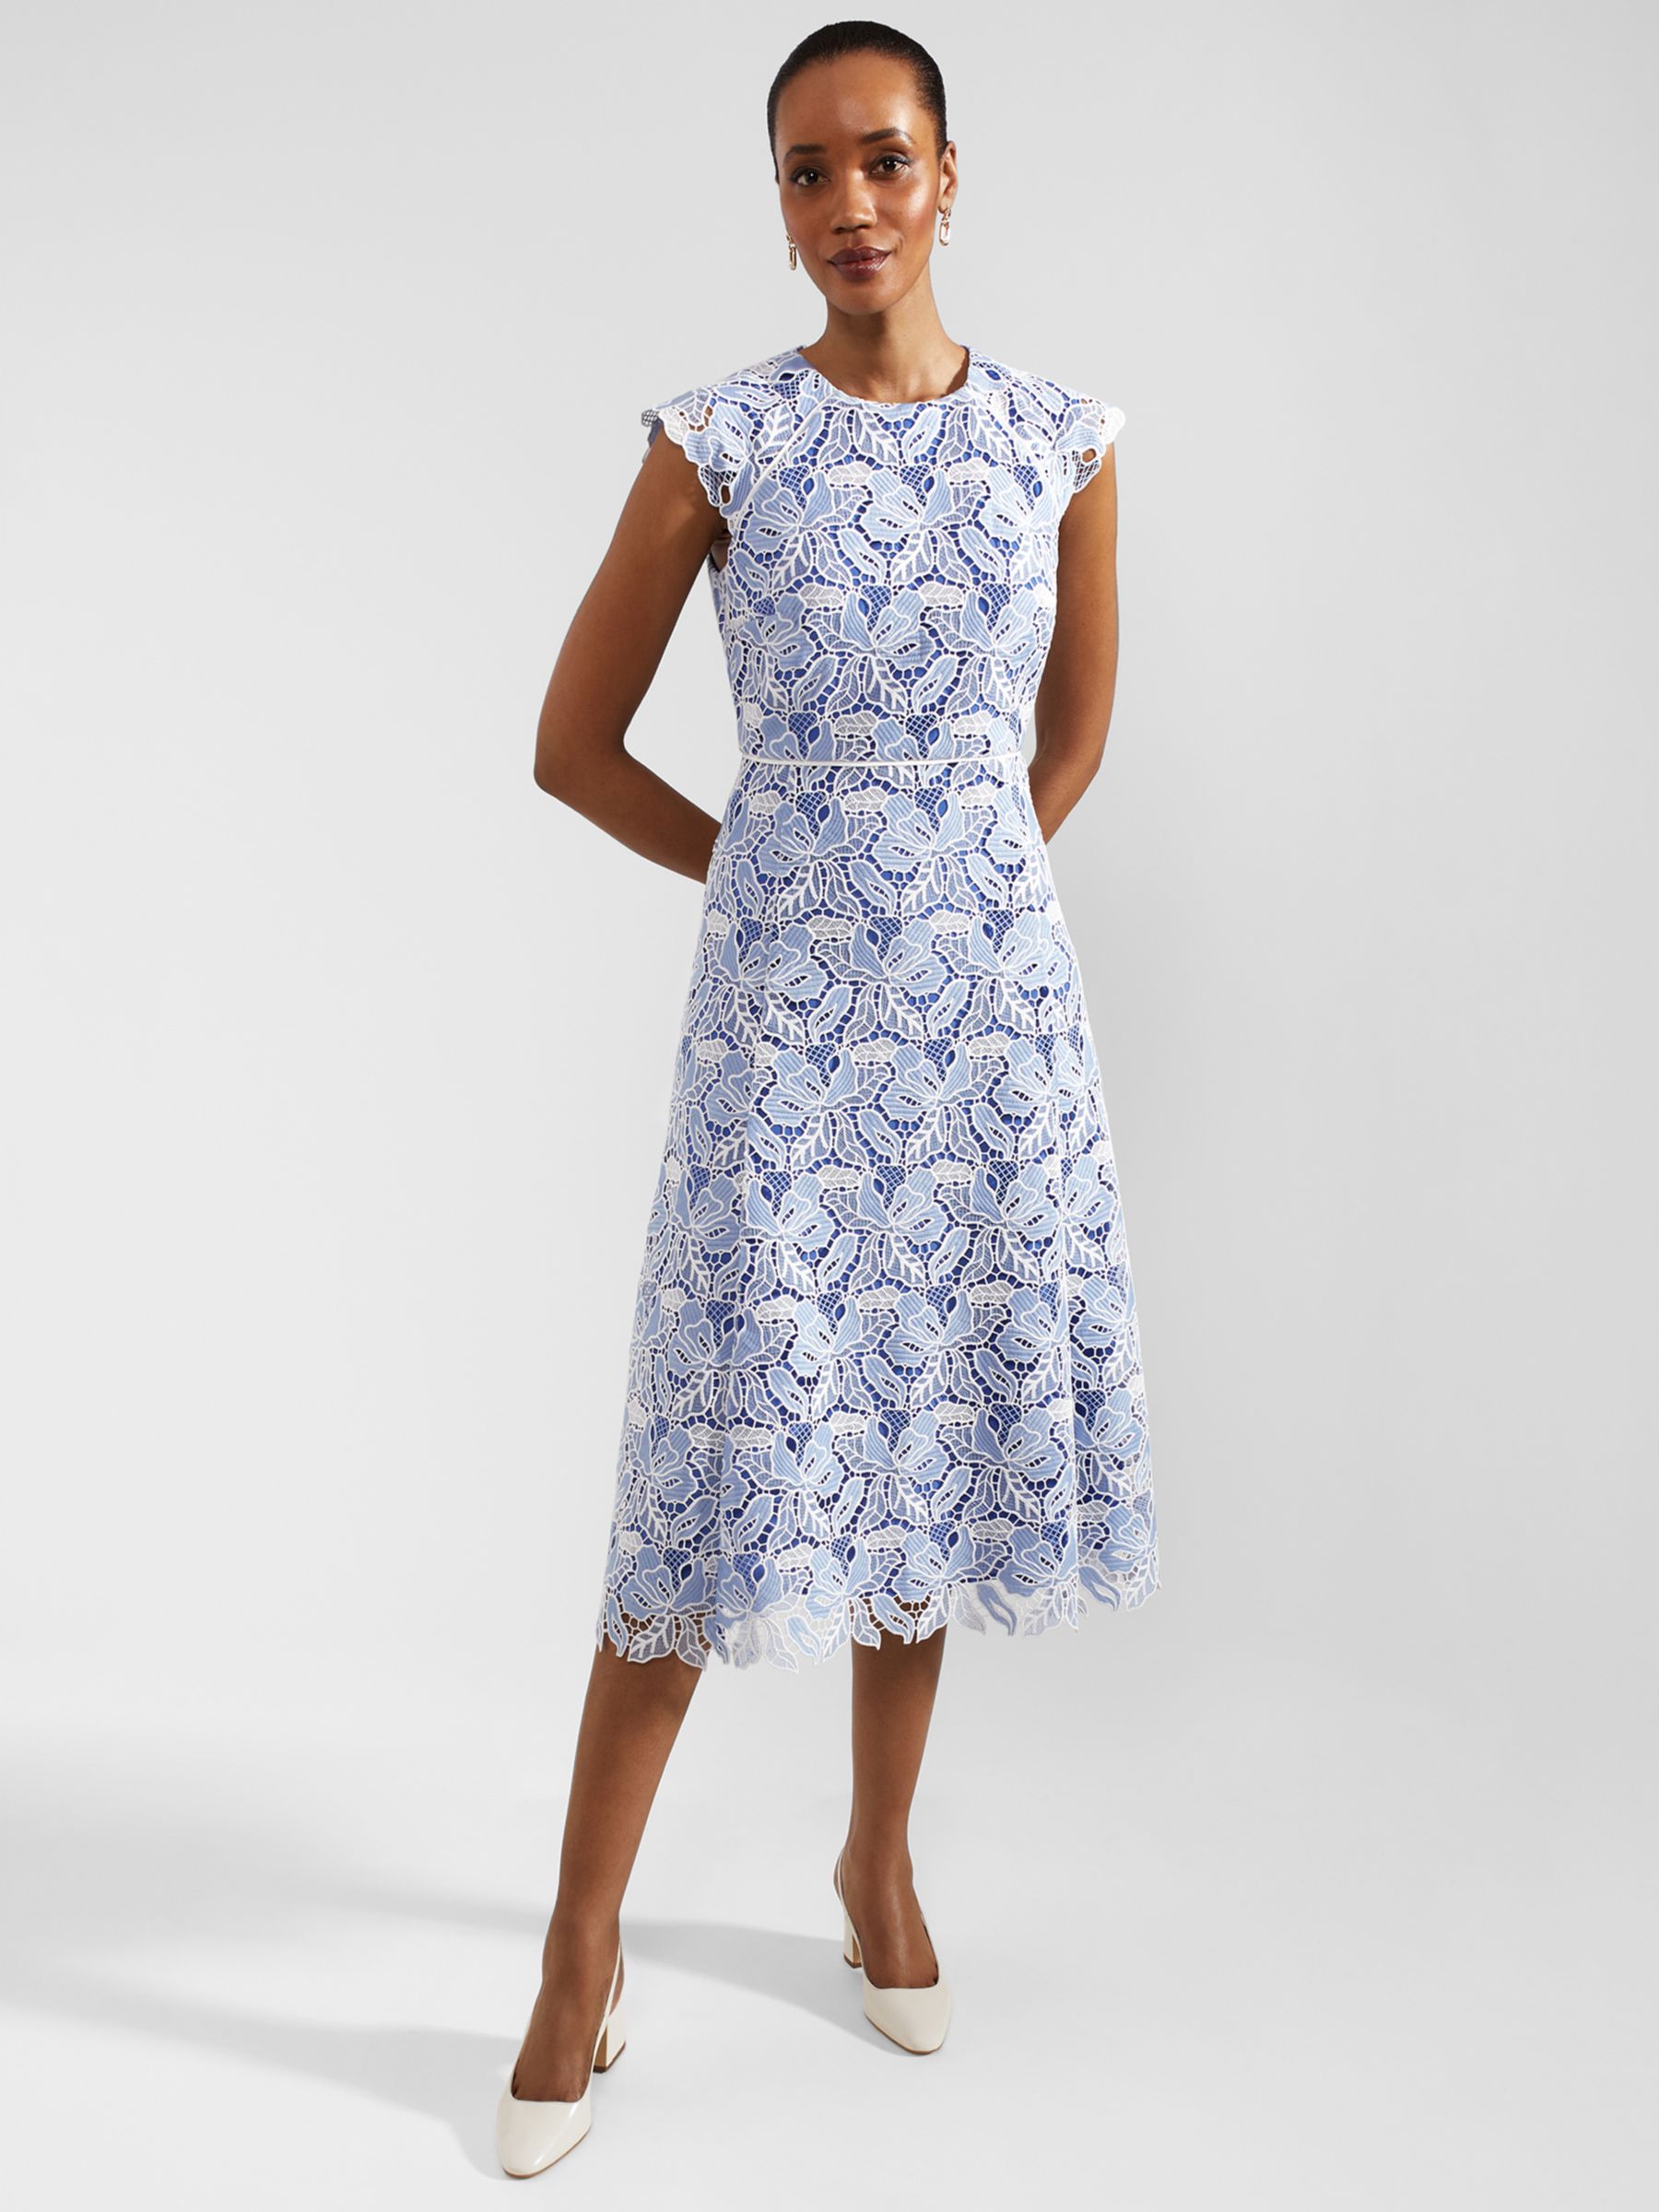 Hobbs Phoebe Cutwork Floral Lace Midi Dress, Blue/Ivory, 10